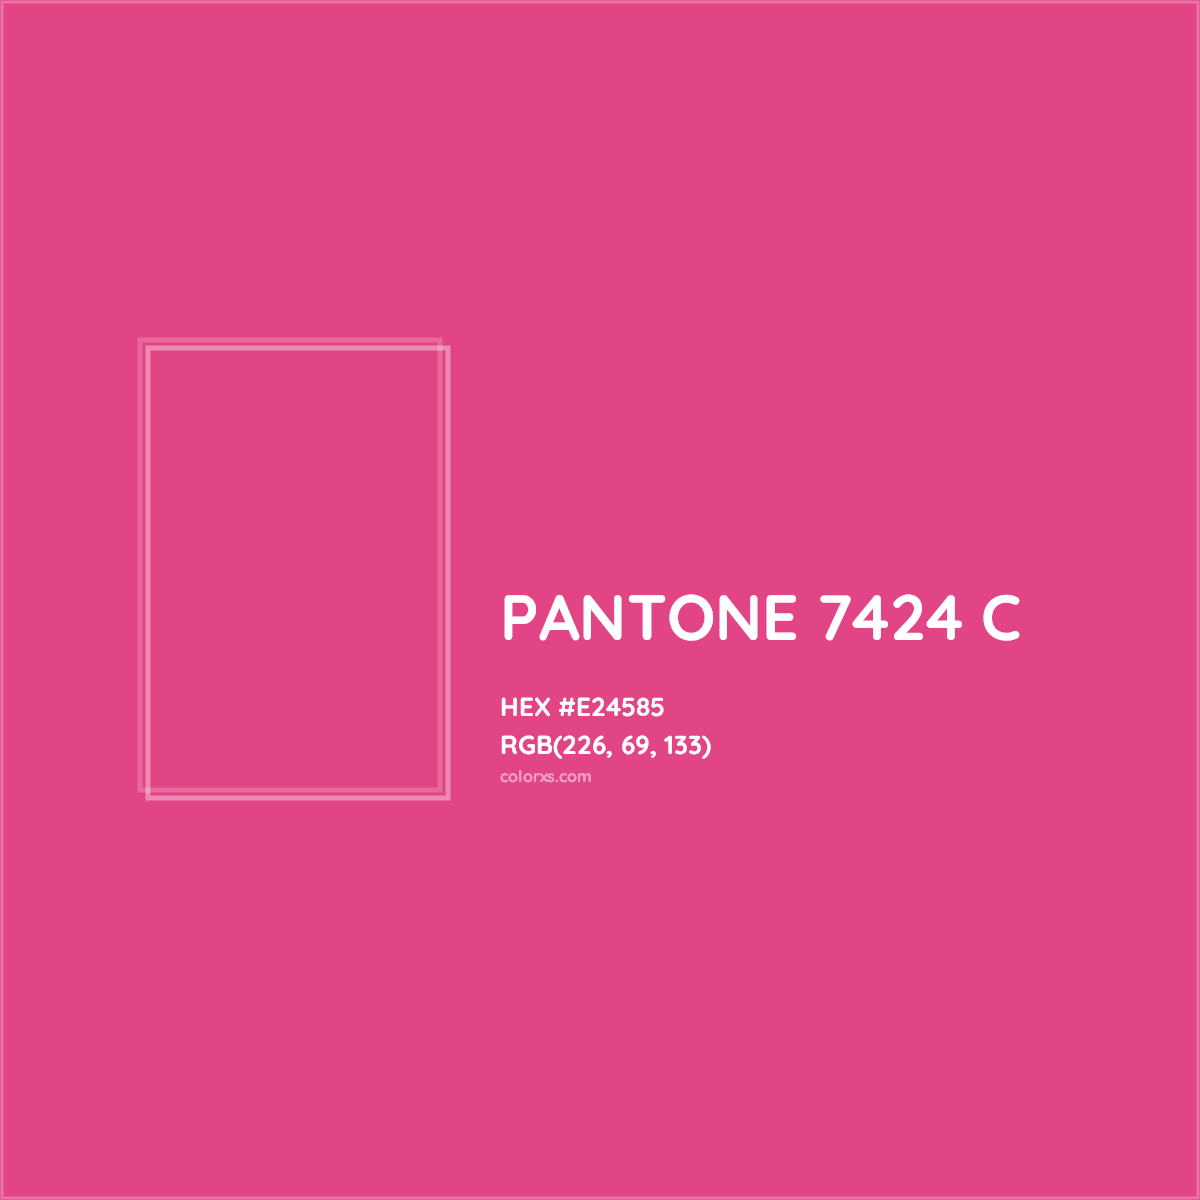 HEX #E24585 PANTONE 7424 C CMS Pantone PMS - Color Code